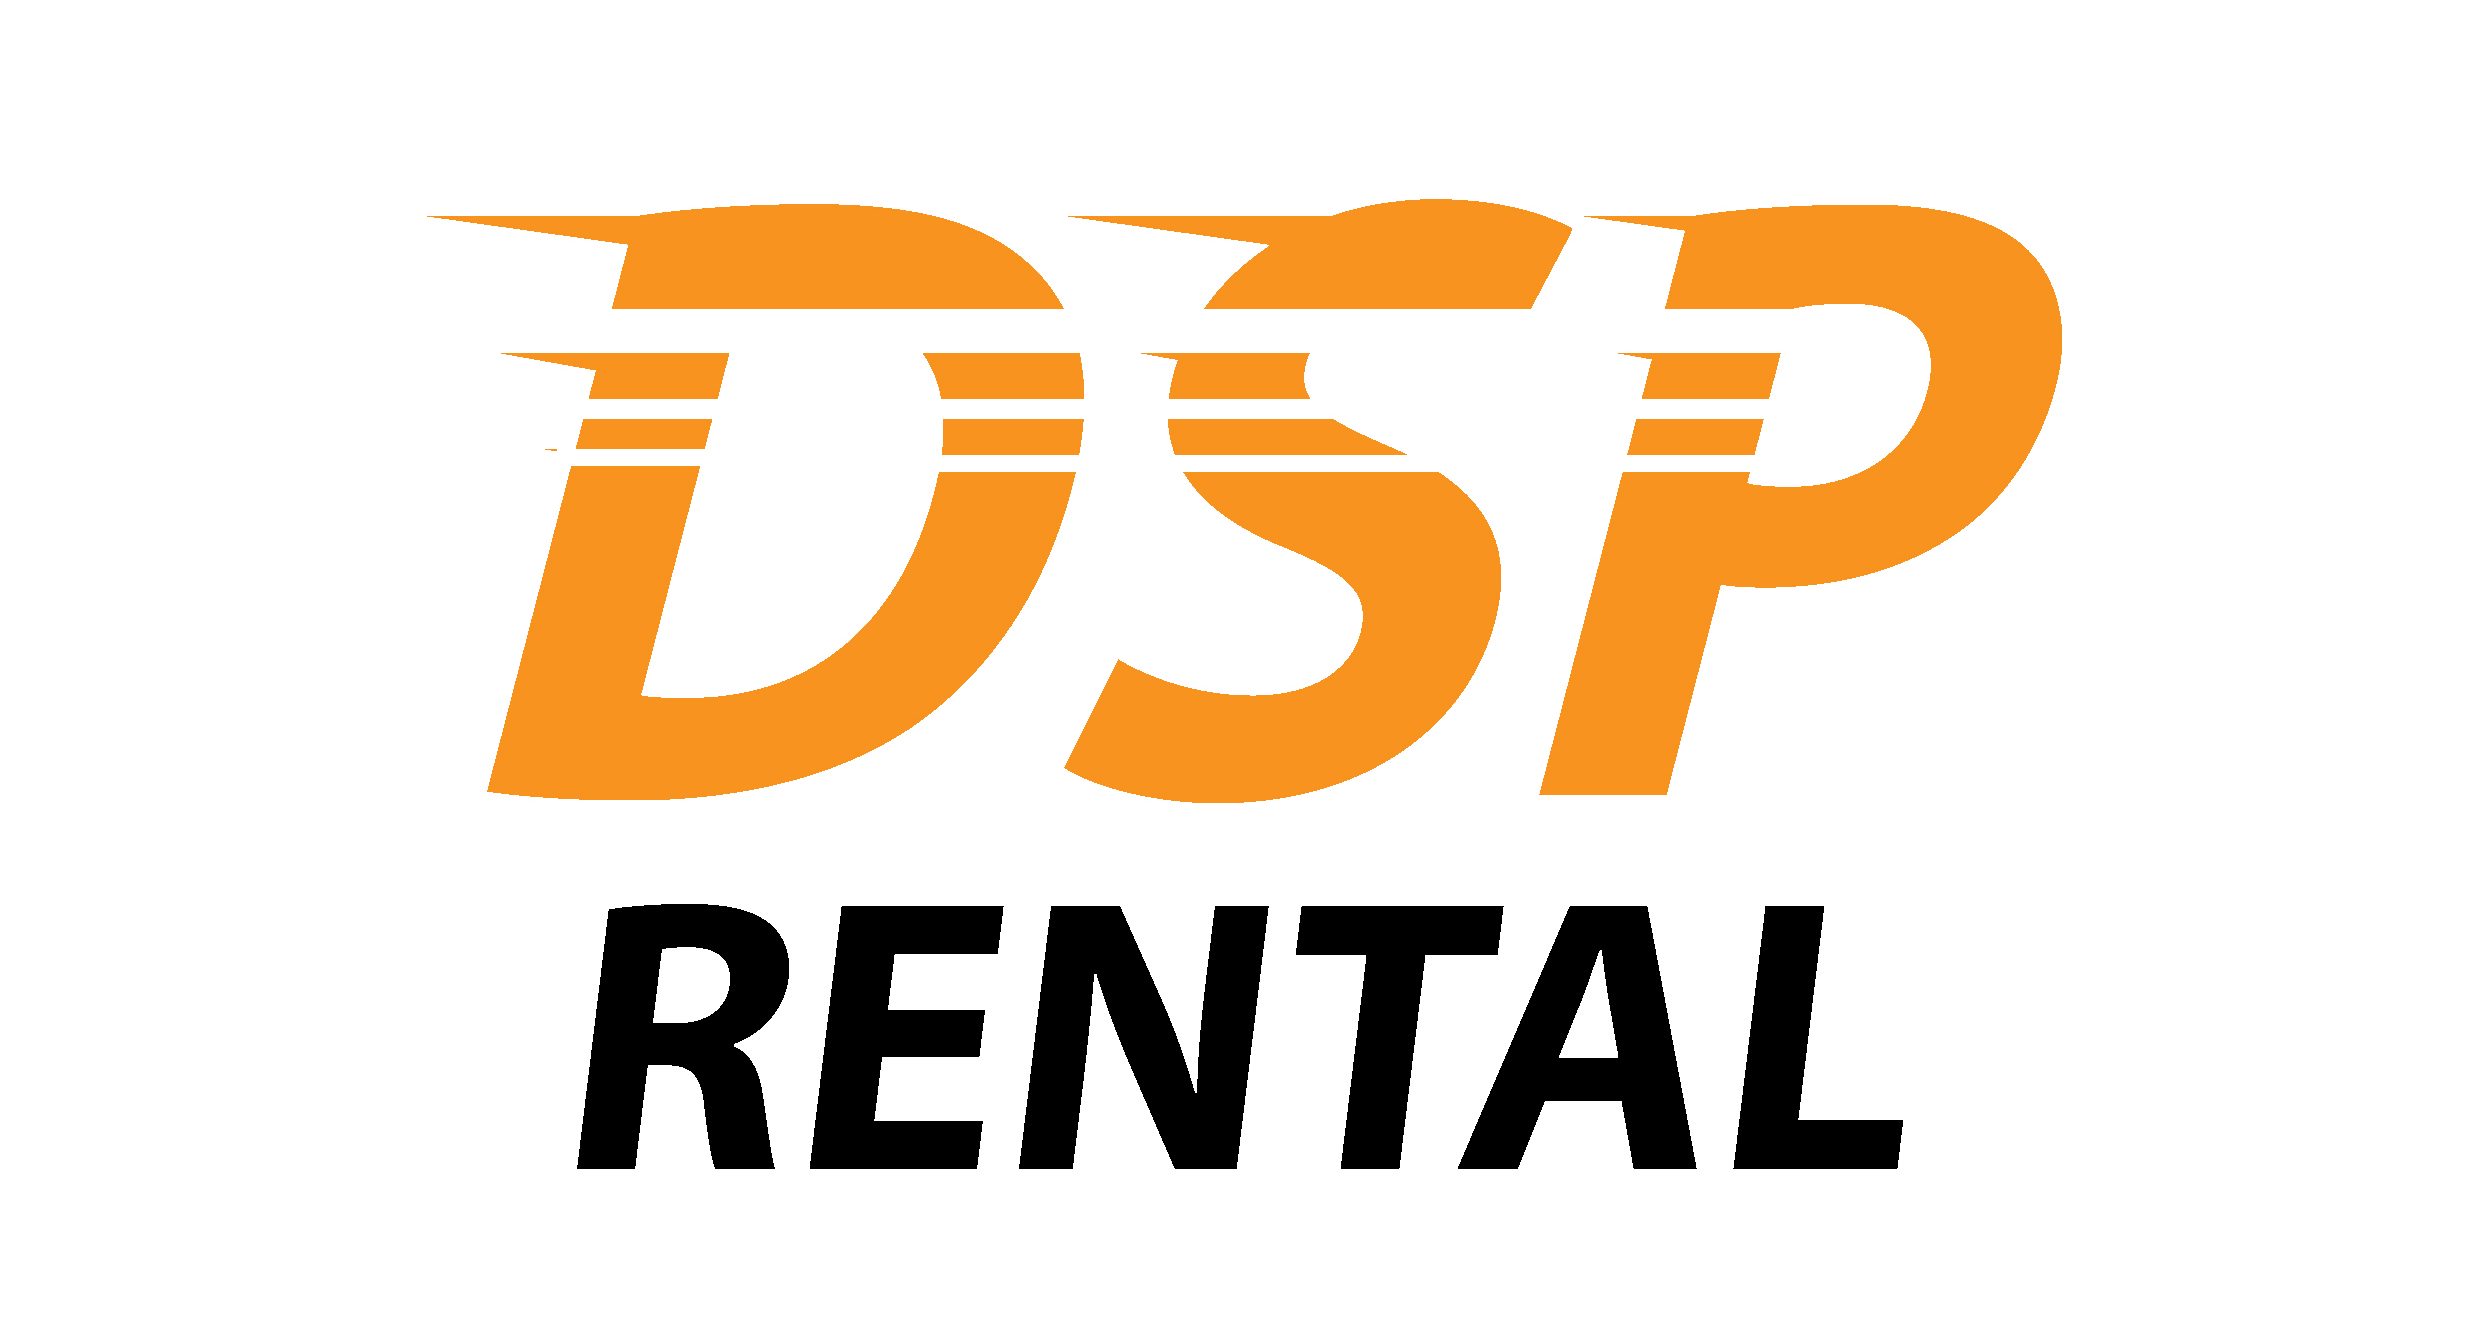 DSP Rental